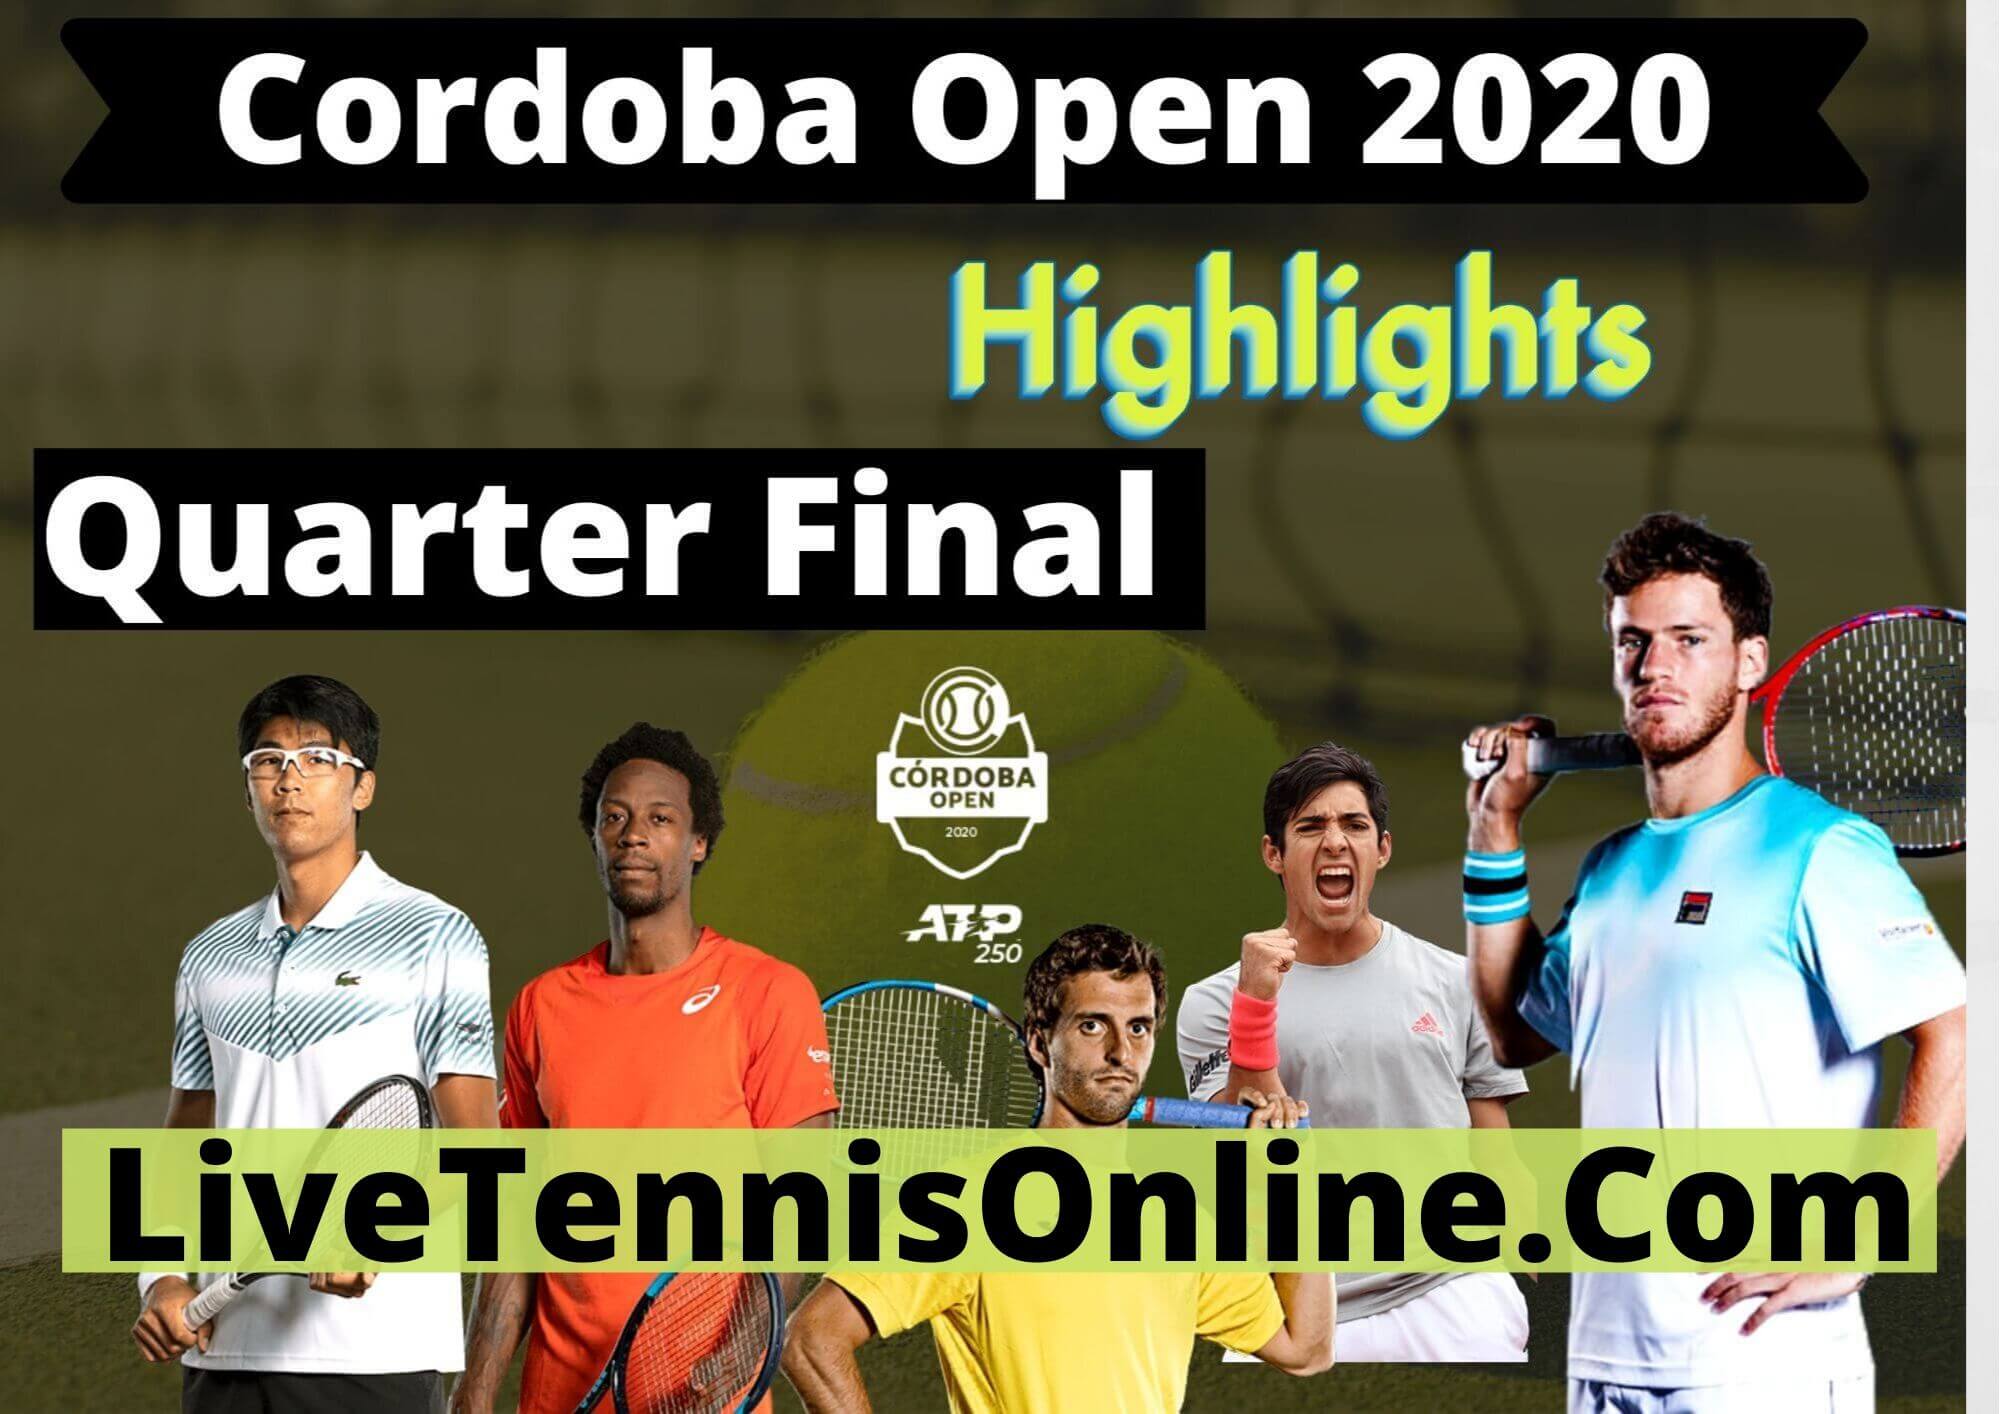 P Cuevas Vs C Garin Quarter Final Highlights Cordoba Open 2020